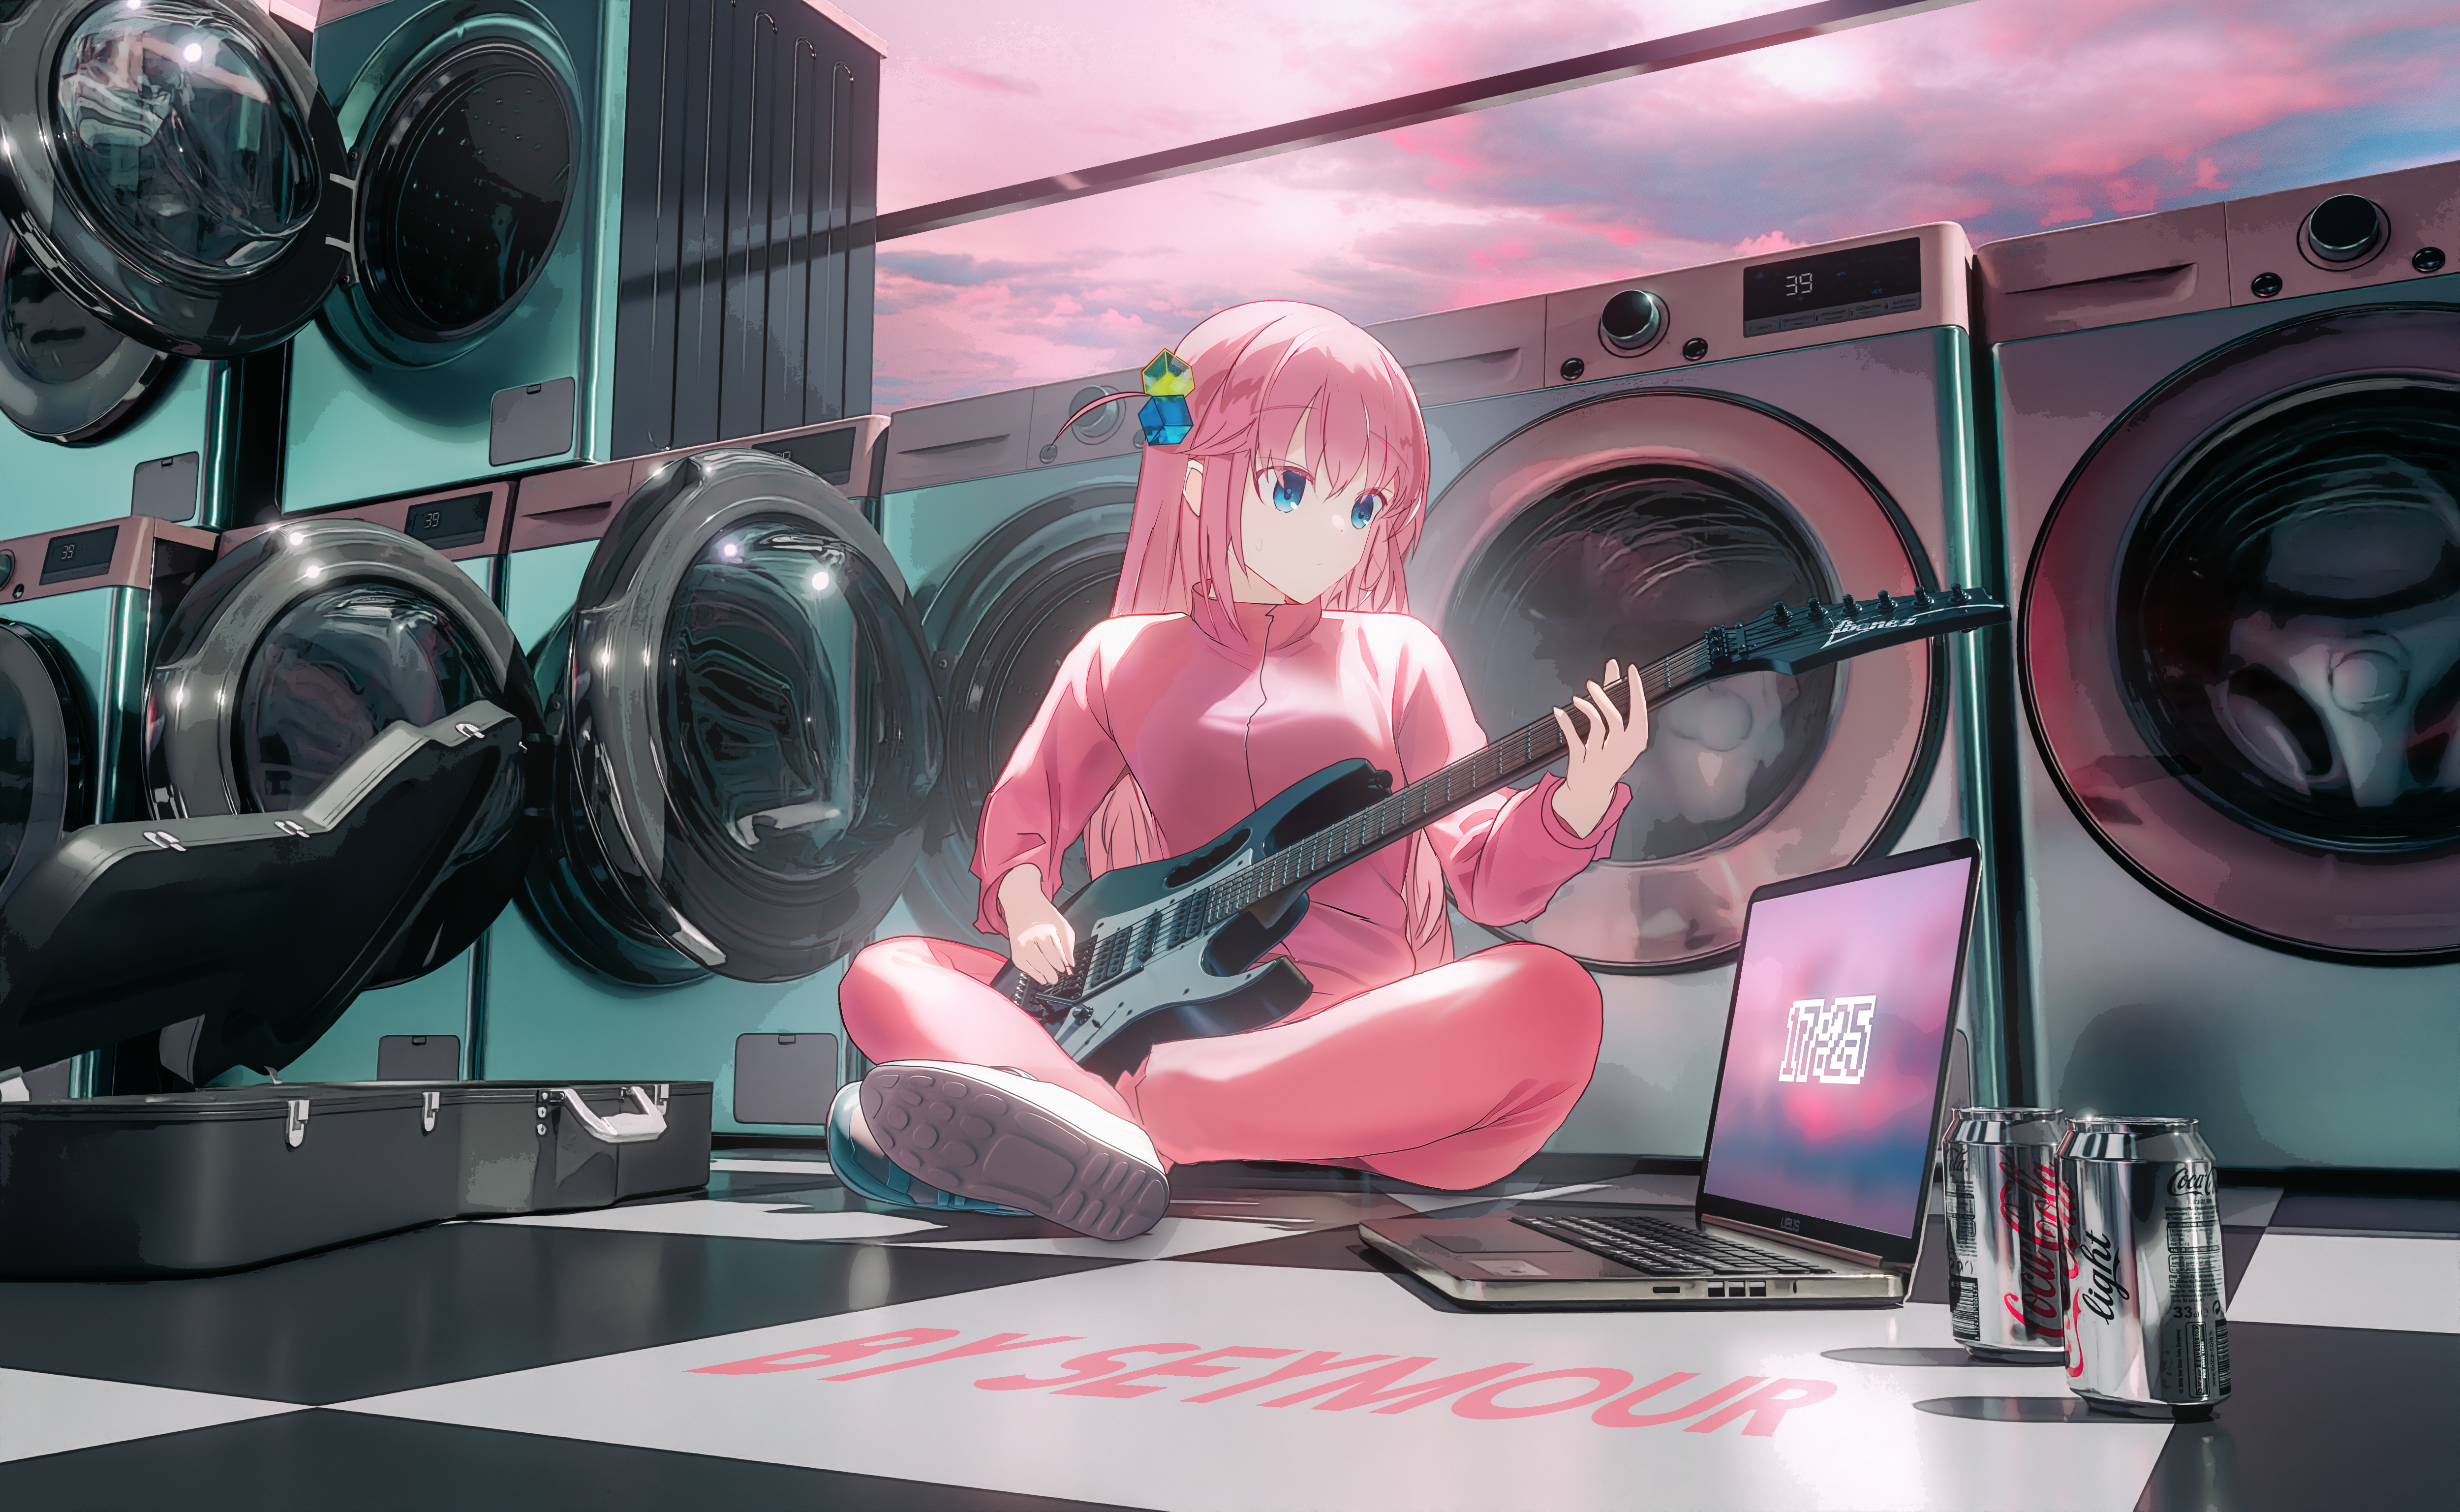 Anime Girls Anime Seymour BOCCHi THE ROCK Laundromat Guitar Laptop Drink Coca Cola Pink Clothing Pin 5000x3073